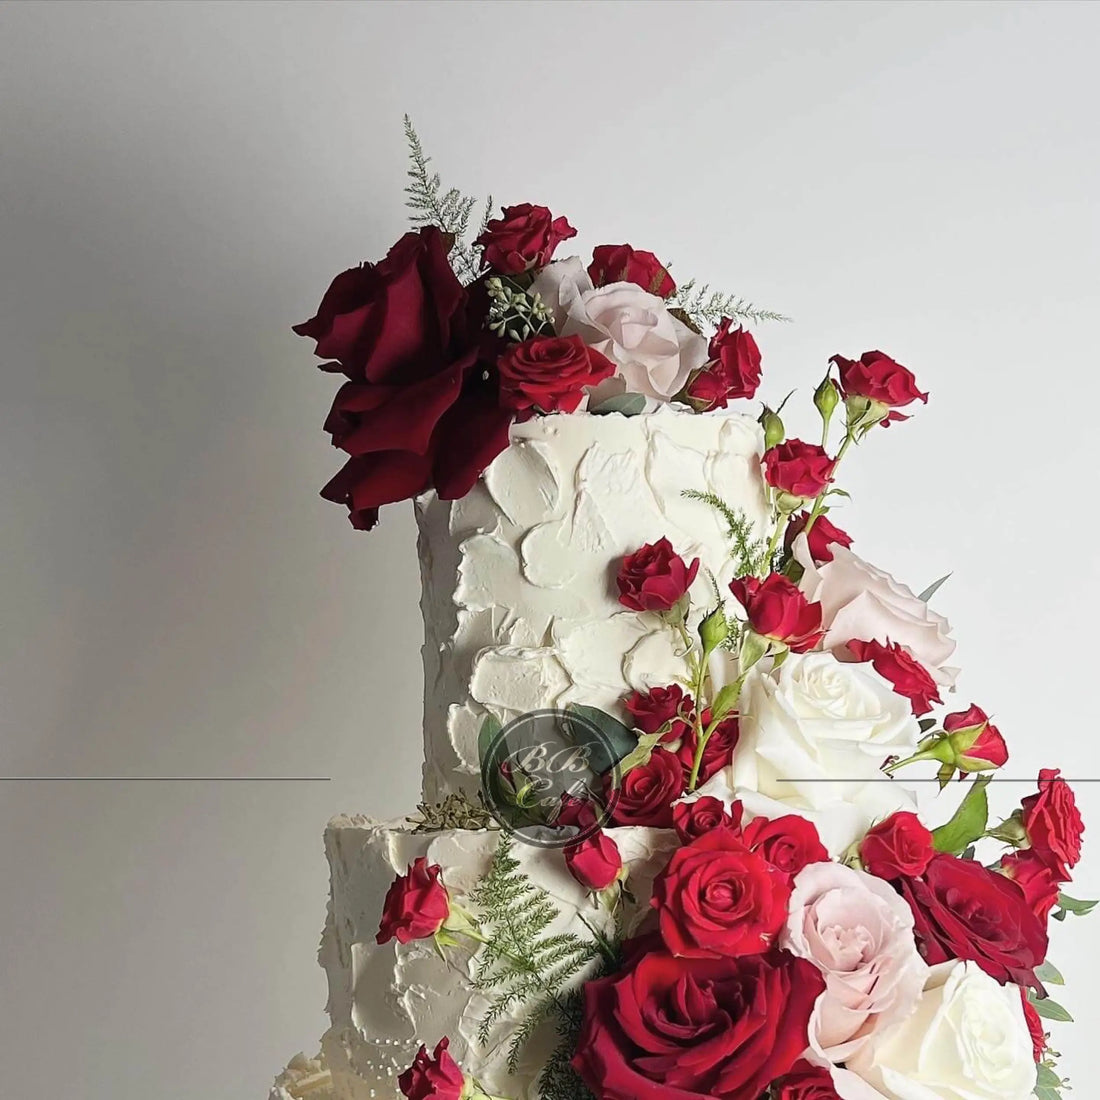 Kaila video - romance &amp; palette knife - wedding cake